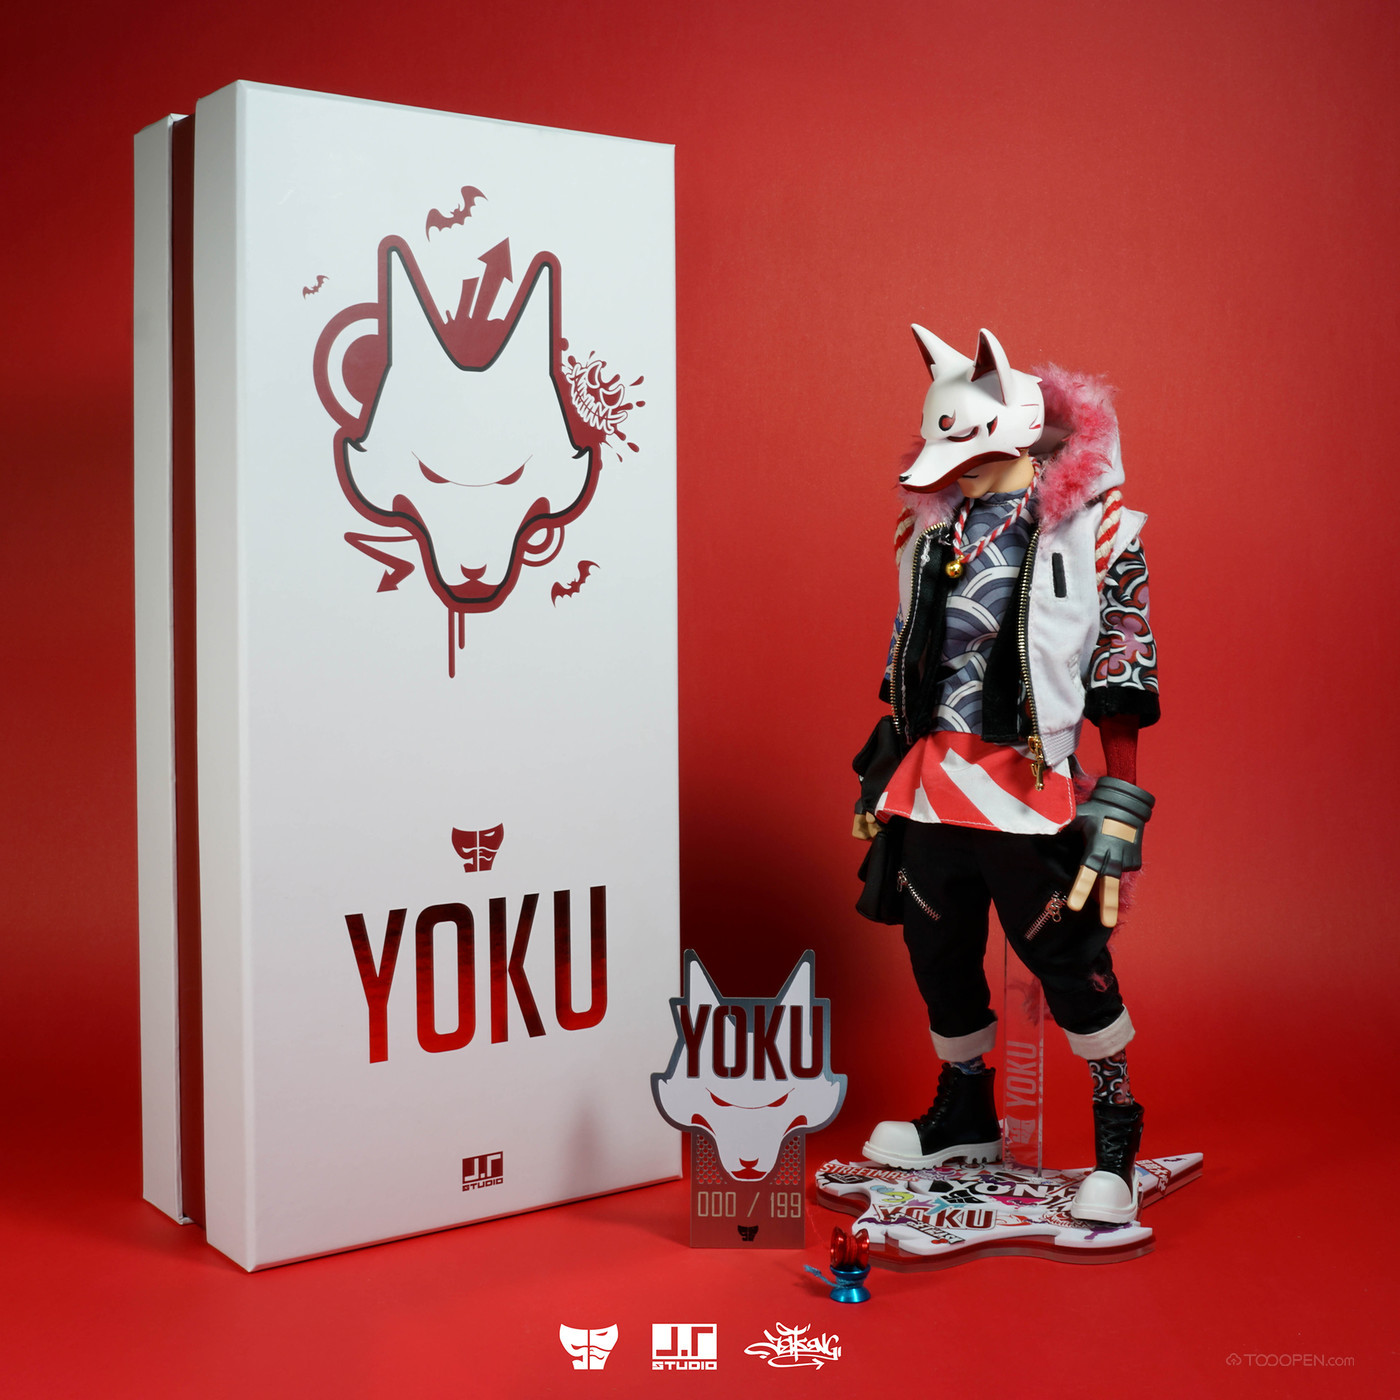  Yoku狐狸面具原创人偶玩具设计欣赏-01